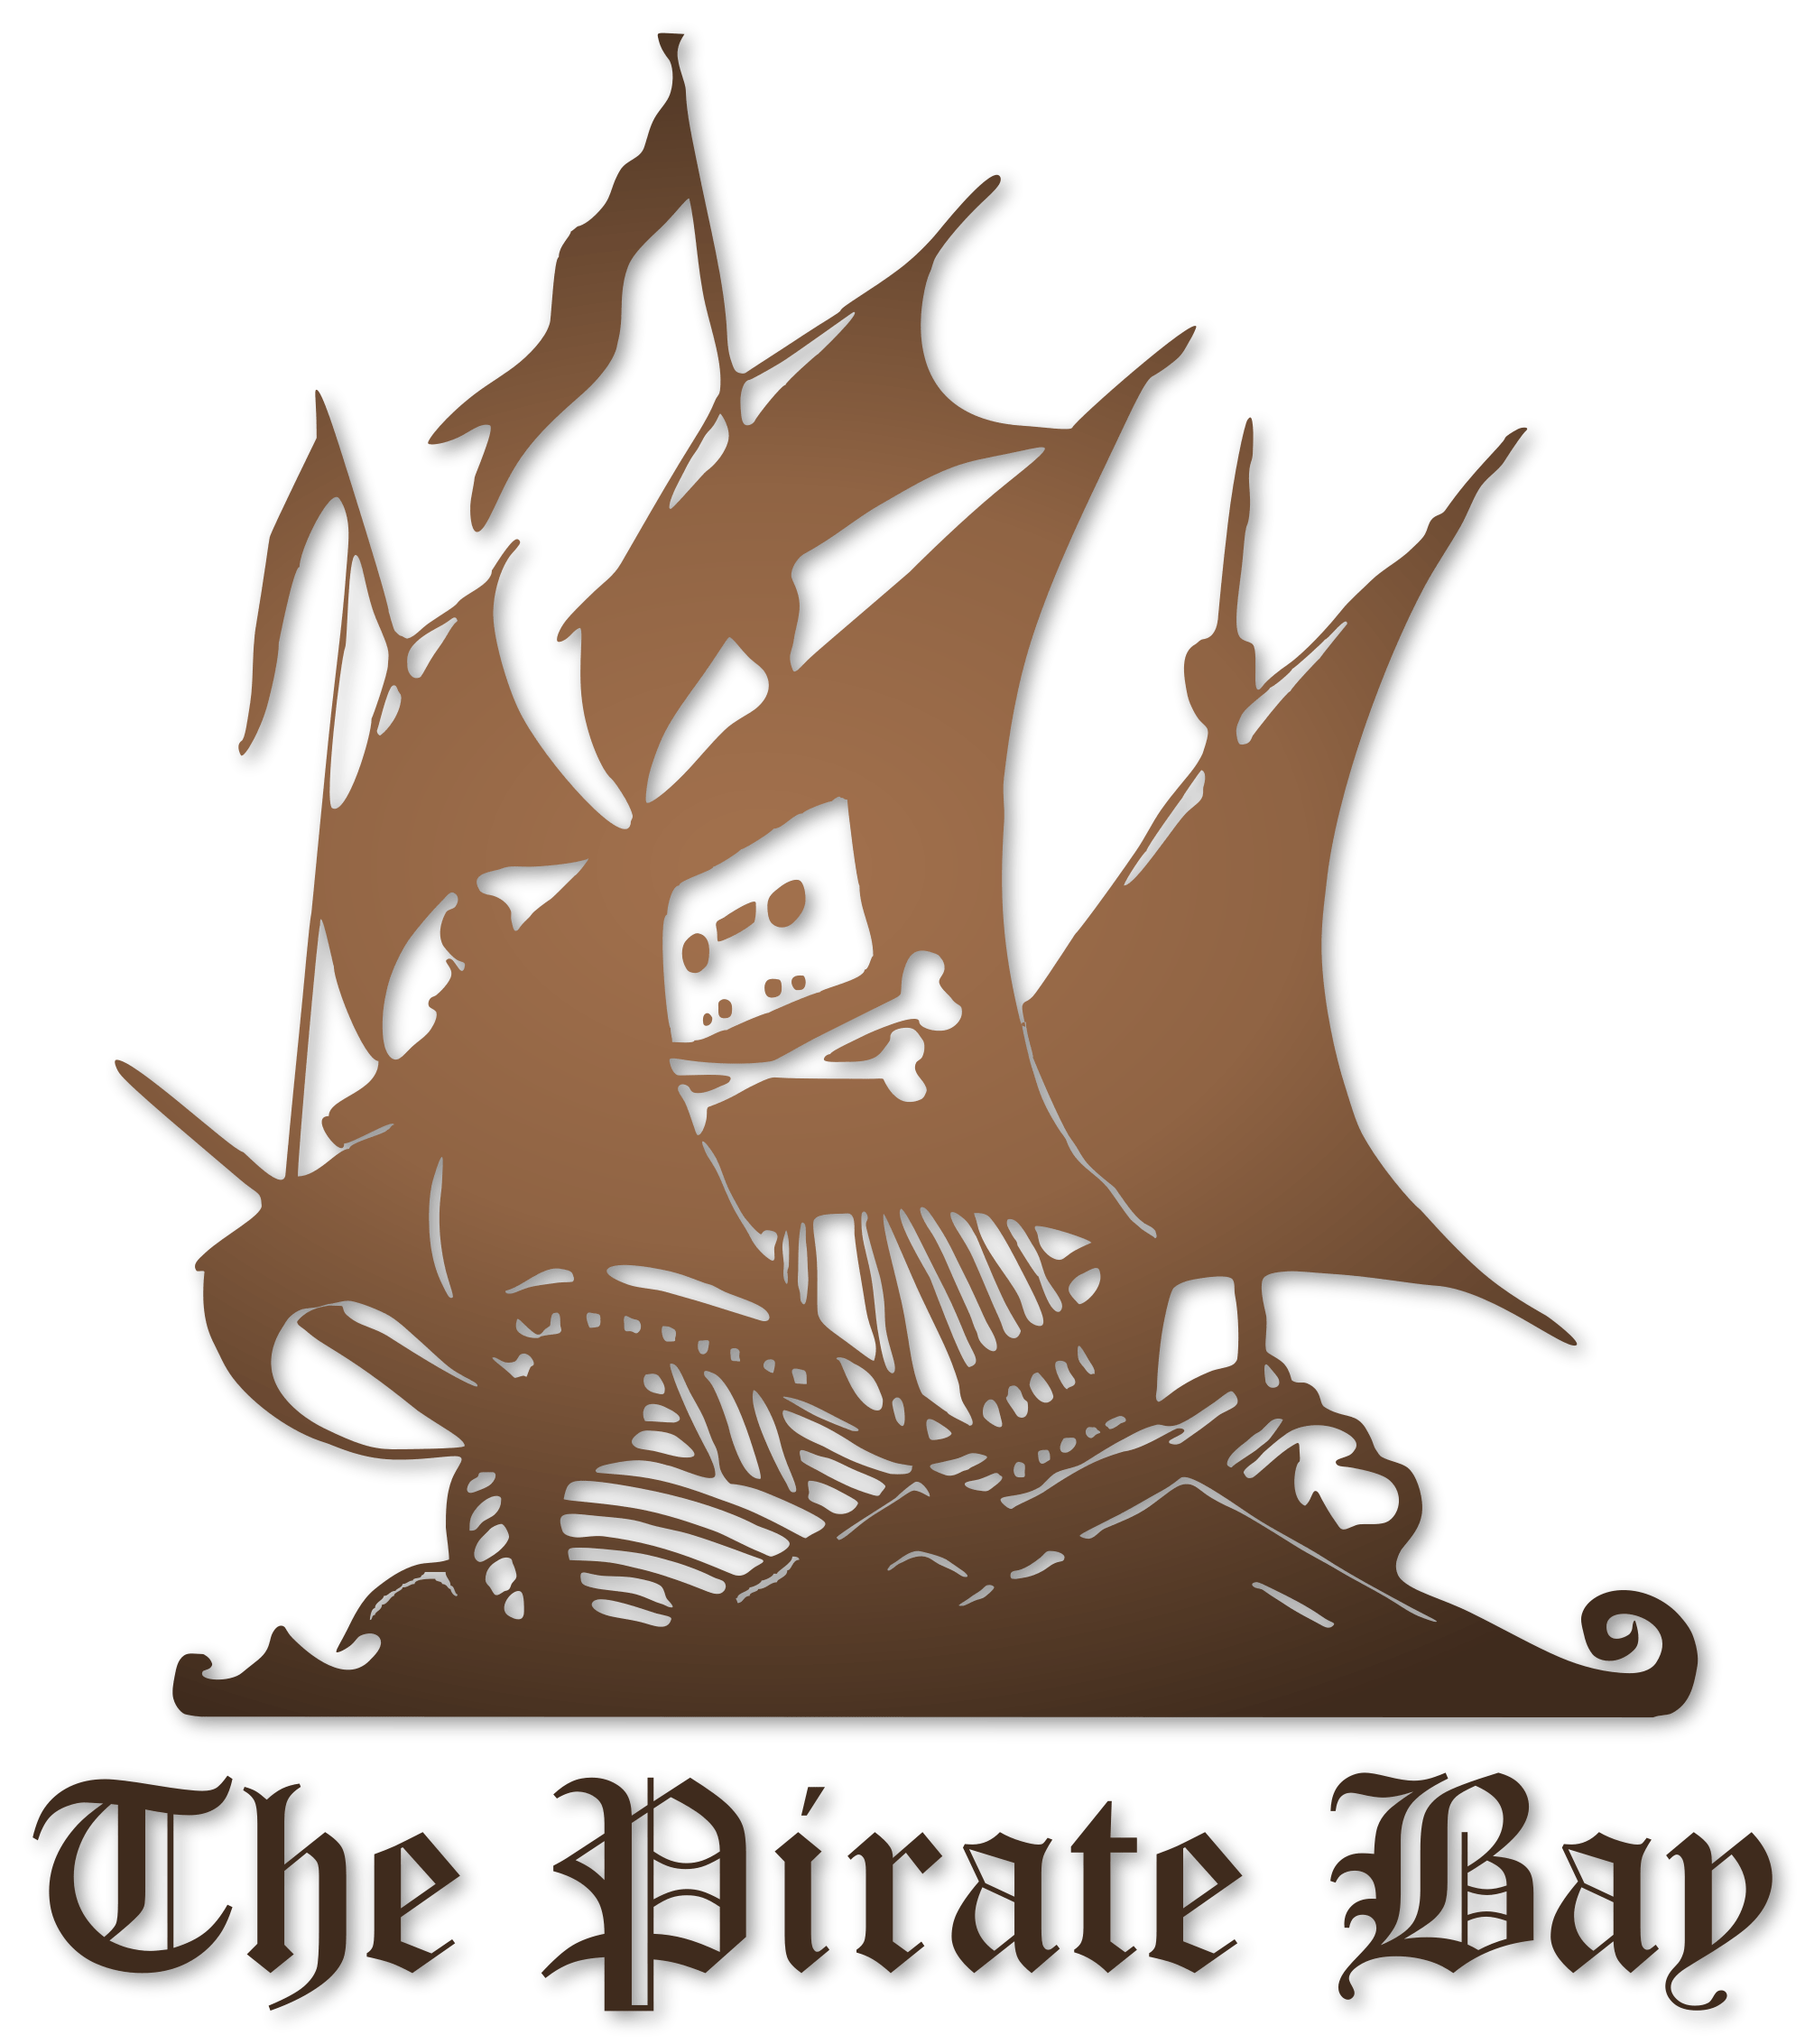 Piratebay Logo - The Pirate Bay